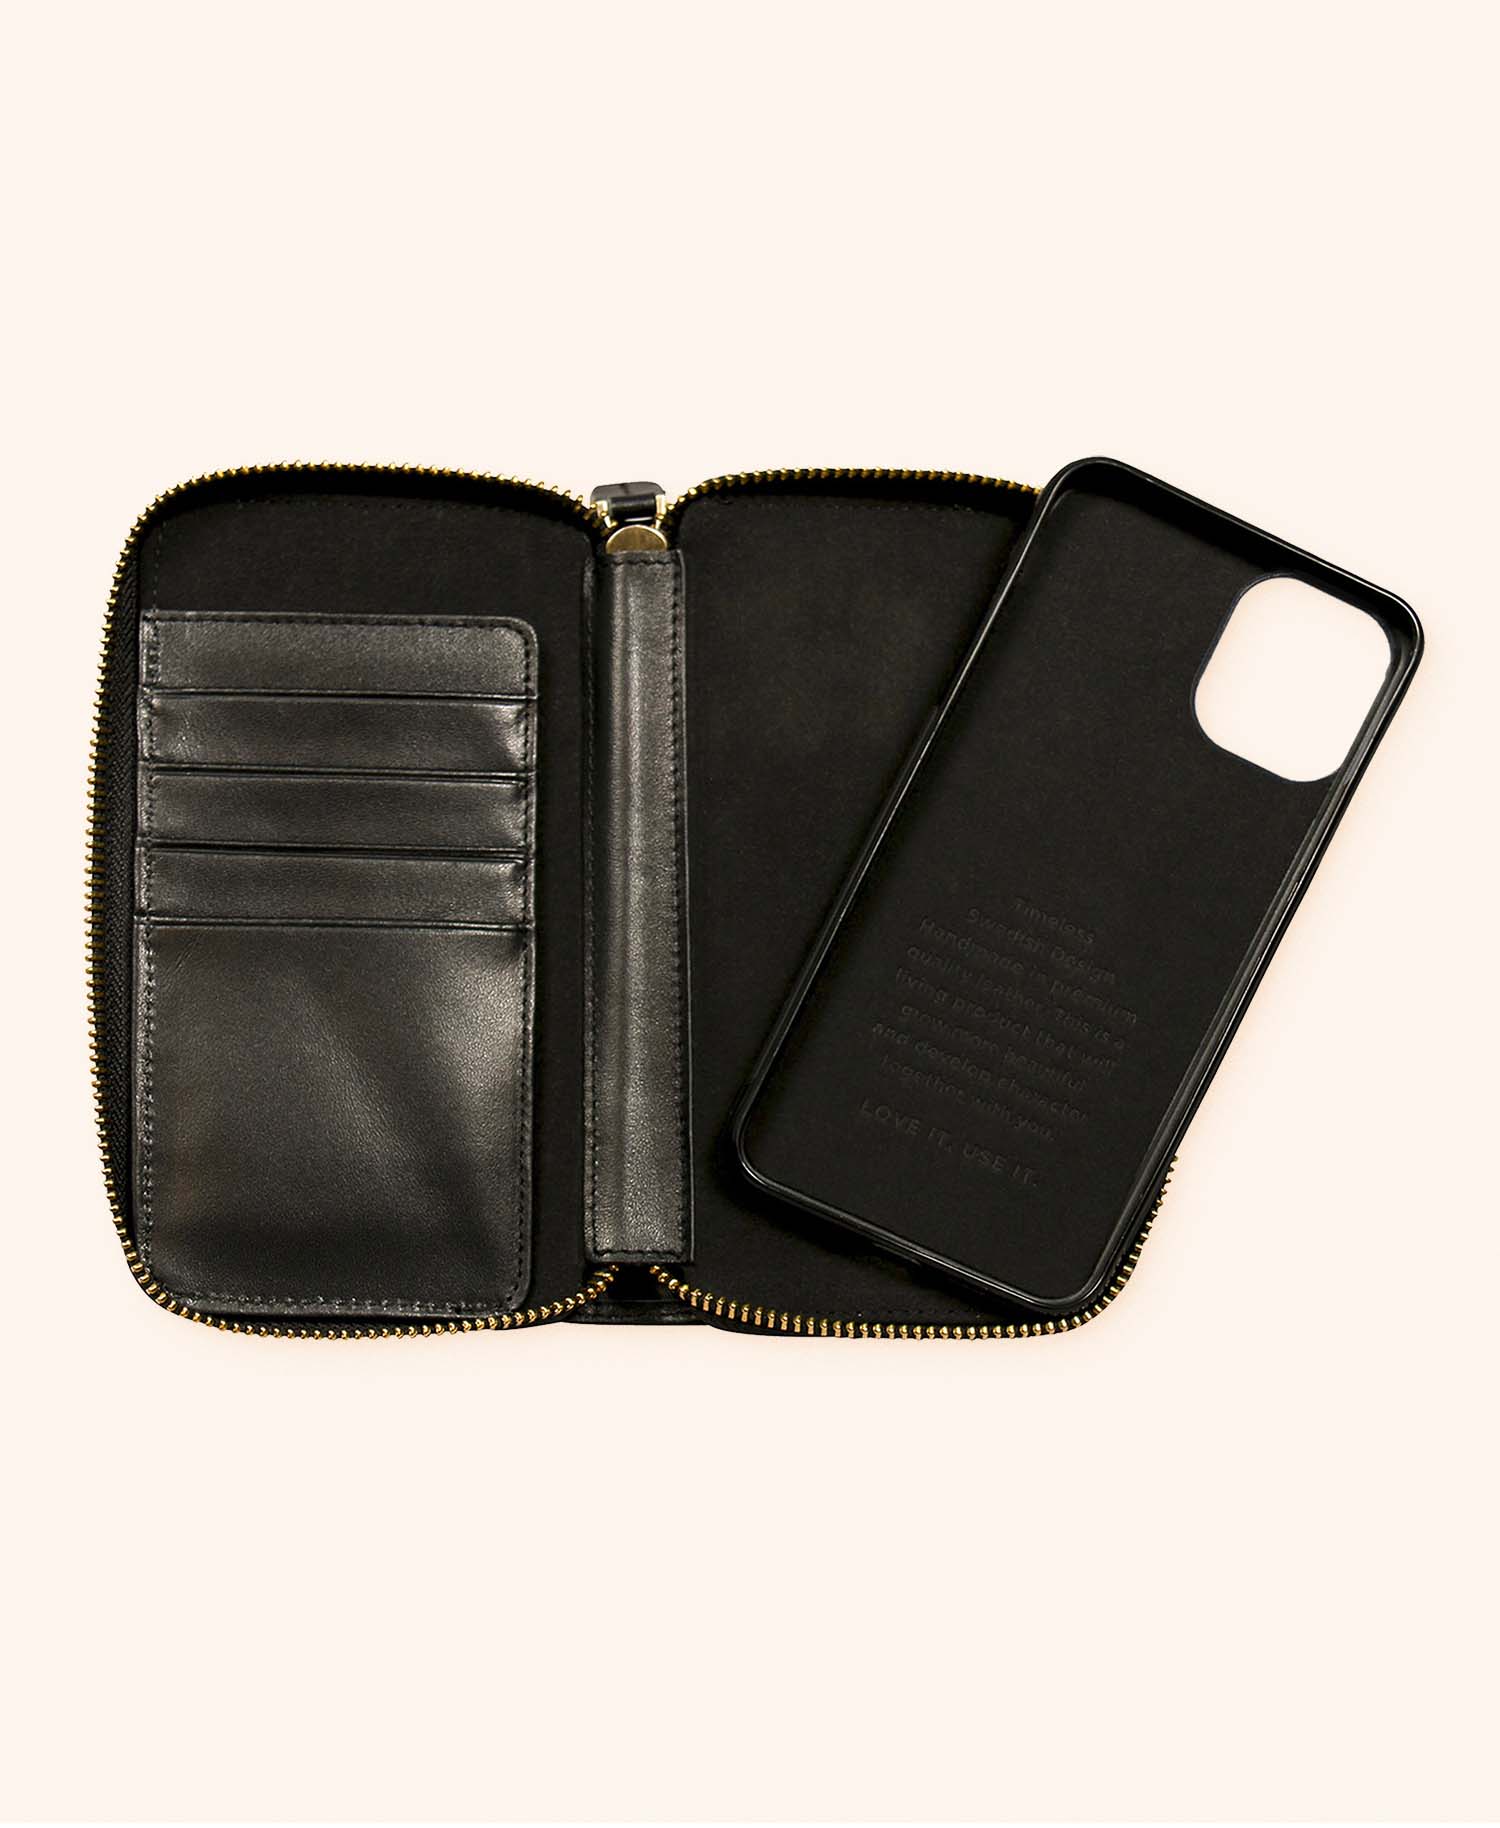 Greg black wallet iphone 11 - inside